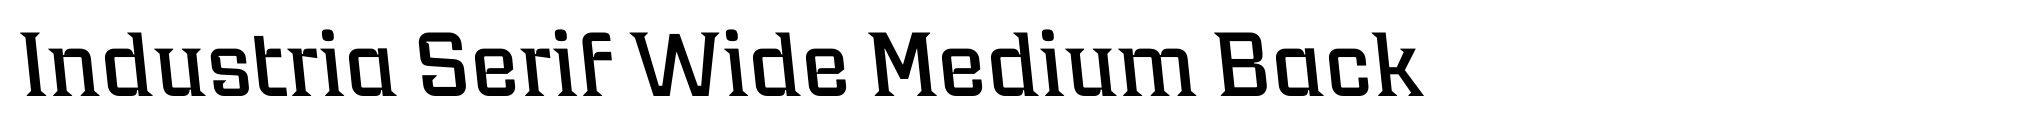 Industria Serif Wide Medium Back image